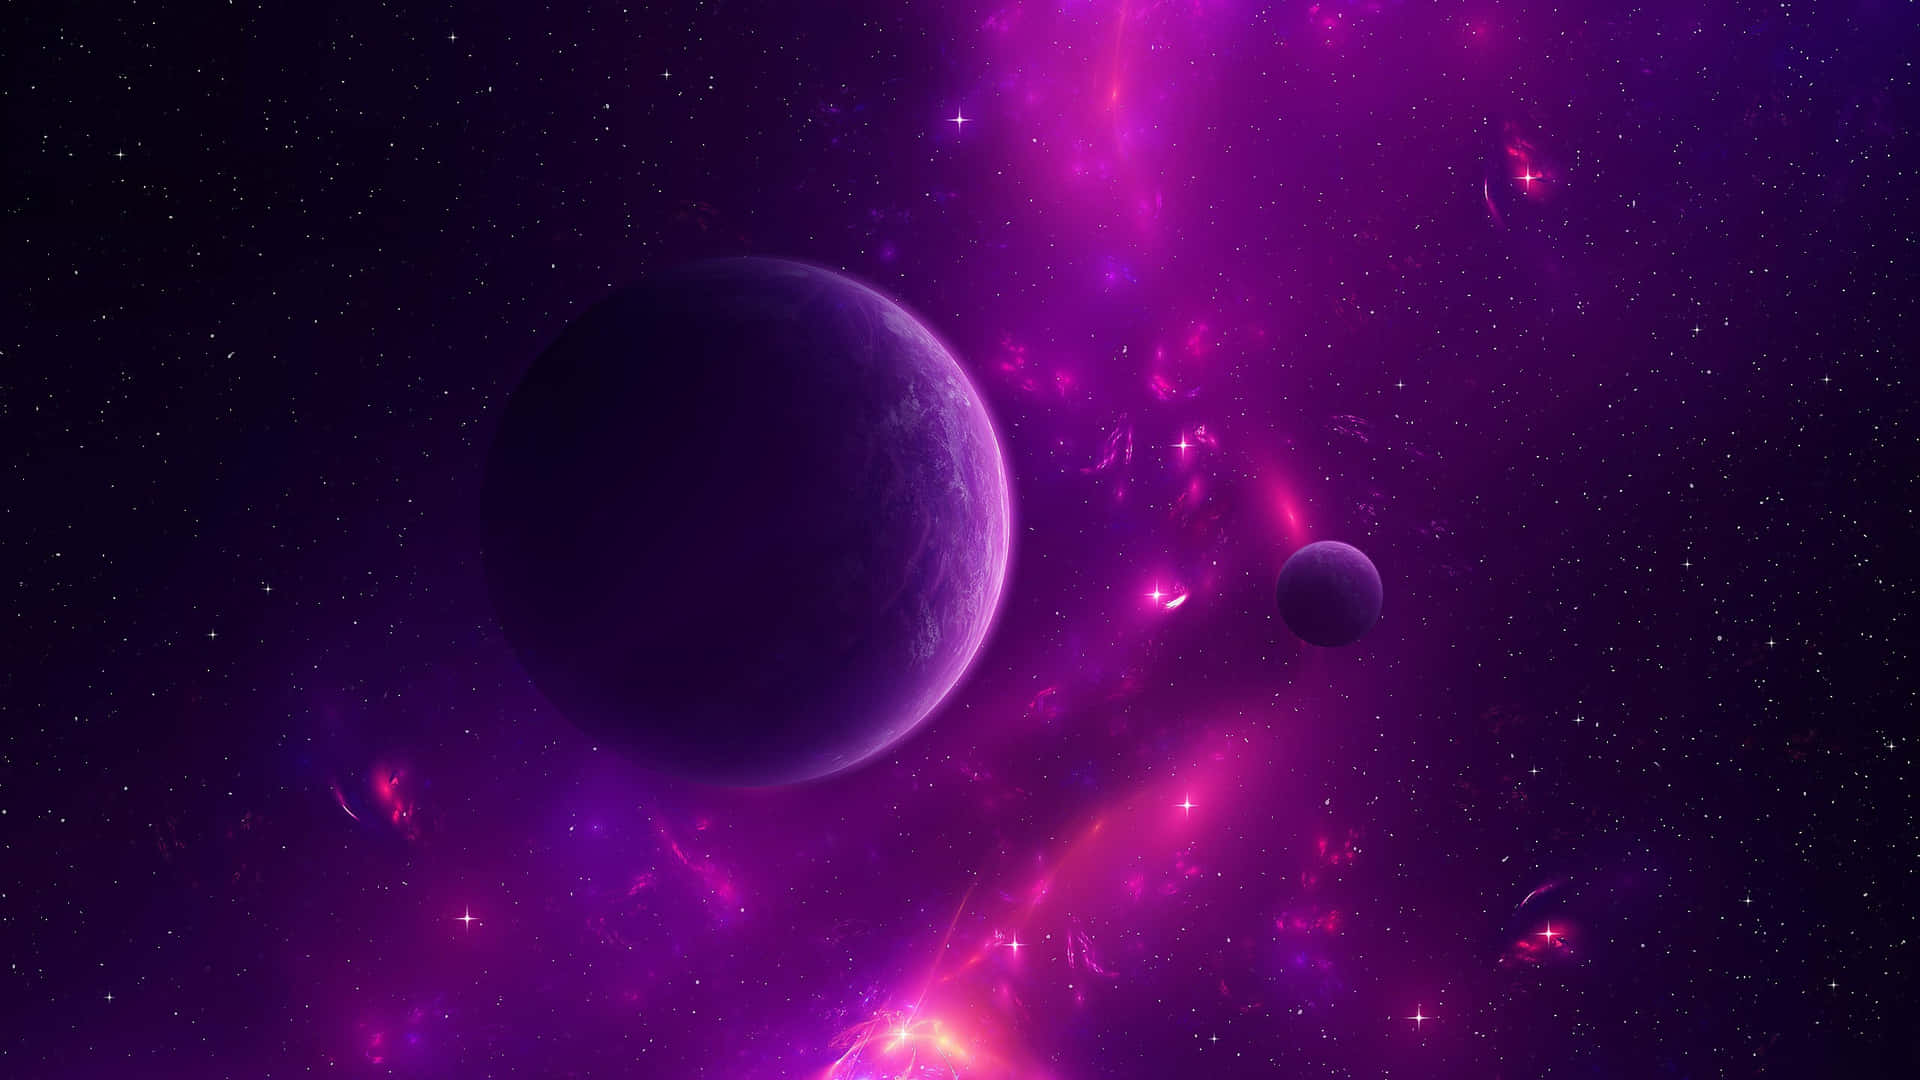 A breathtaking view of a Purple Galaxy